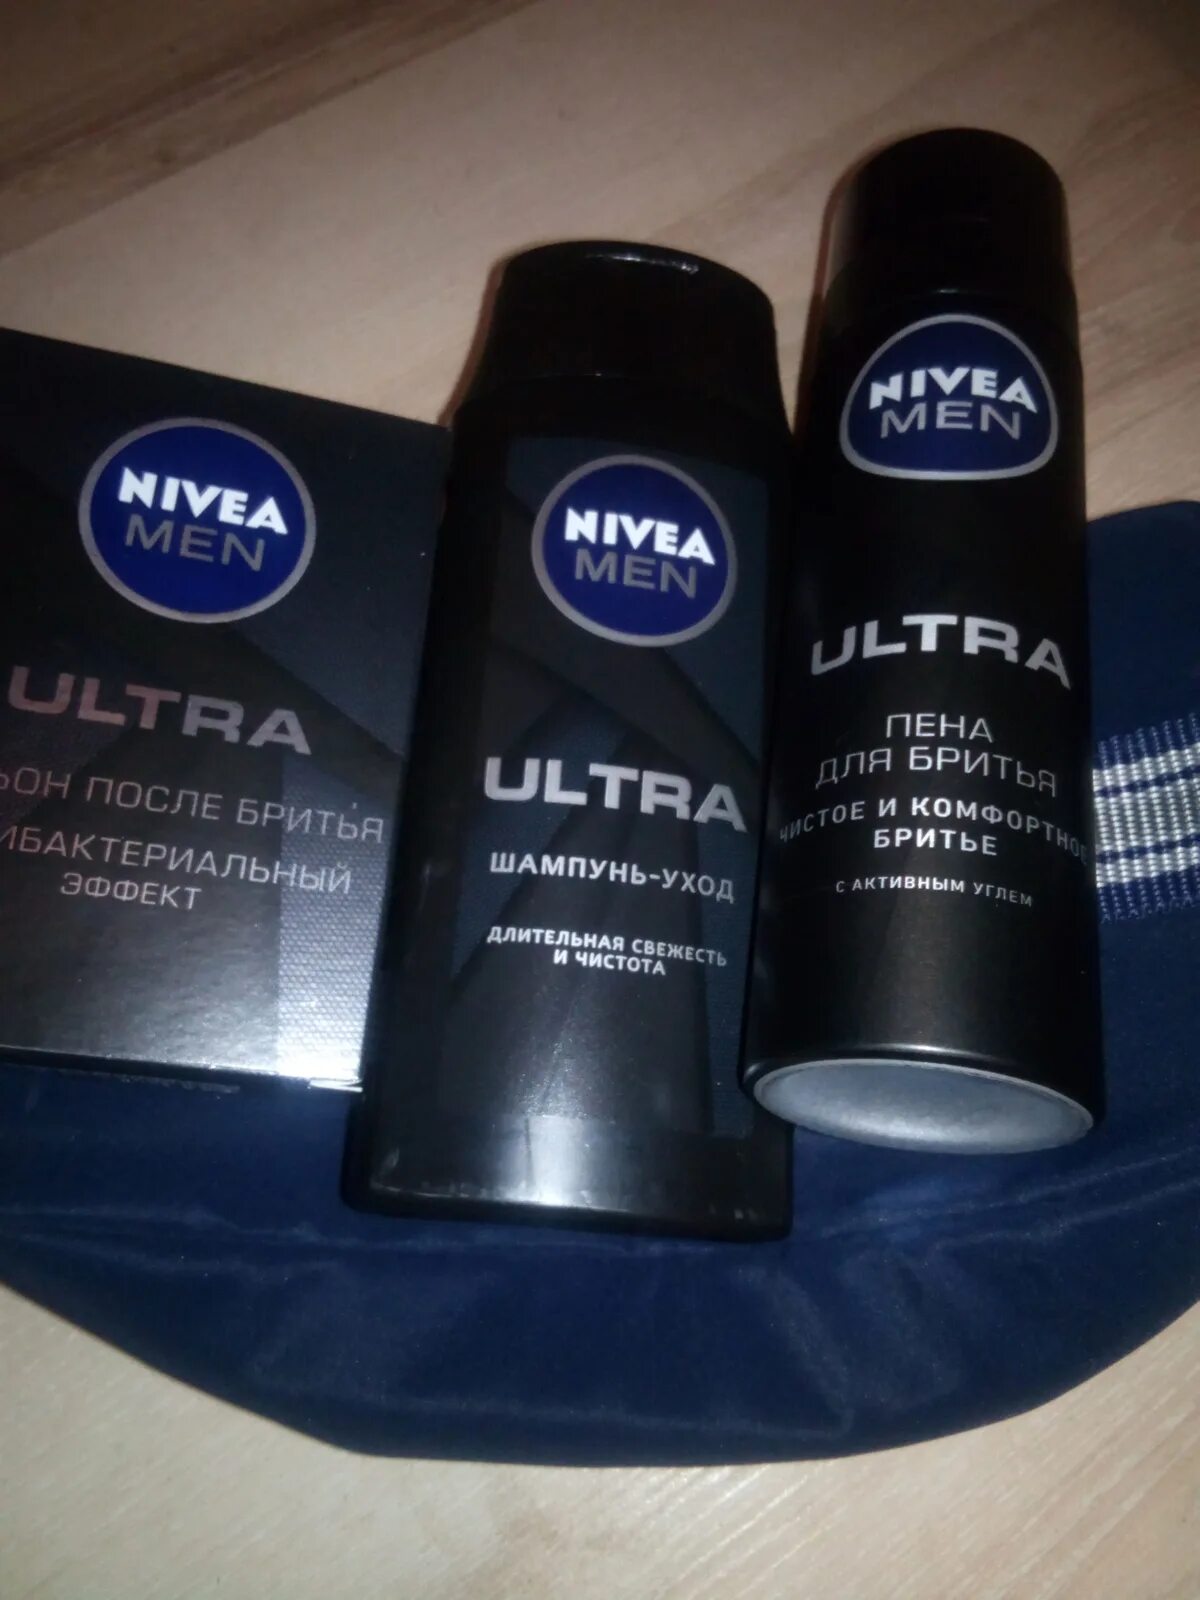 Нивея мен фулл. Мыло Nivea men Ultra. Нивея набор для мужчин черная упаковка.